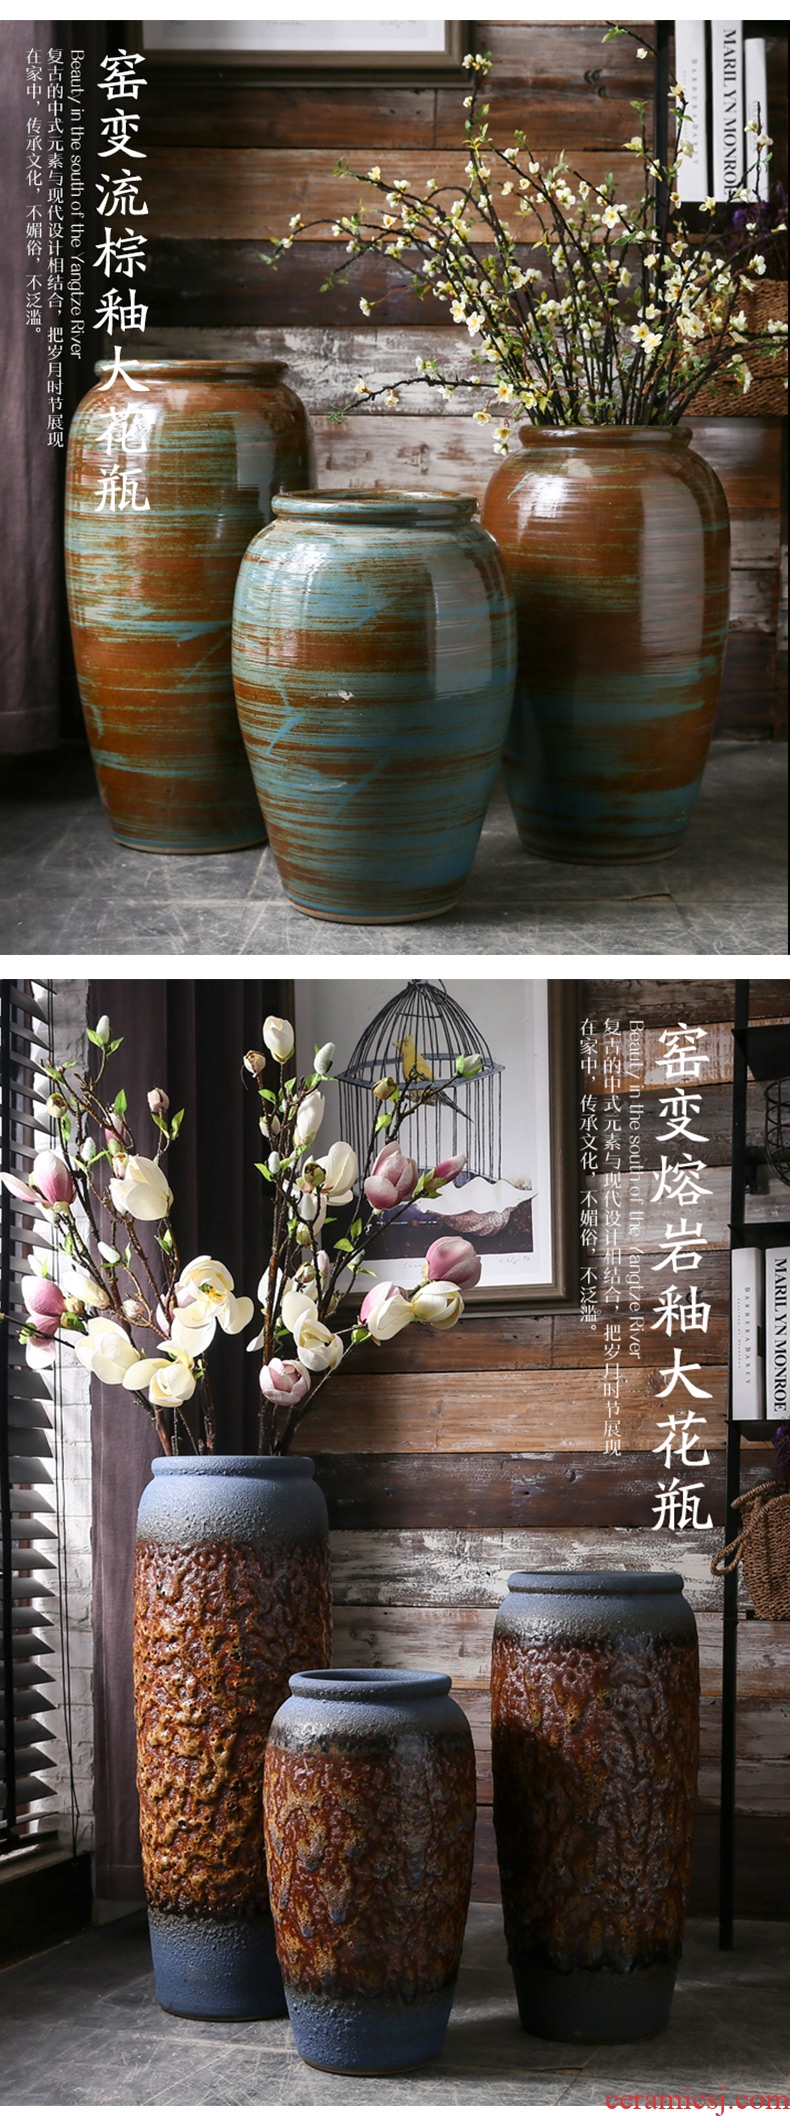 Antique hand - made porcelain of jingdezhen ceramics youligong double elephant peach pomegranate flower vase decoration - 600530502358